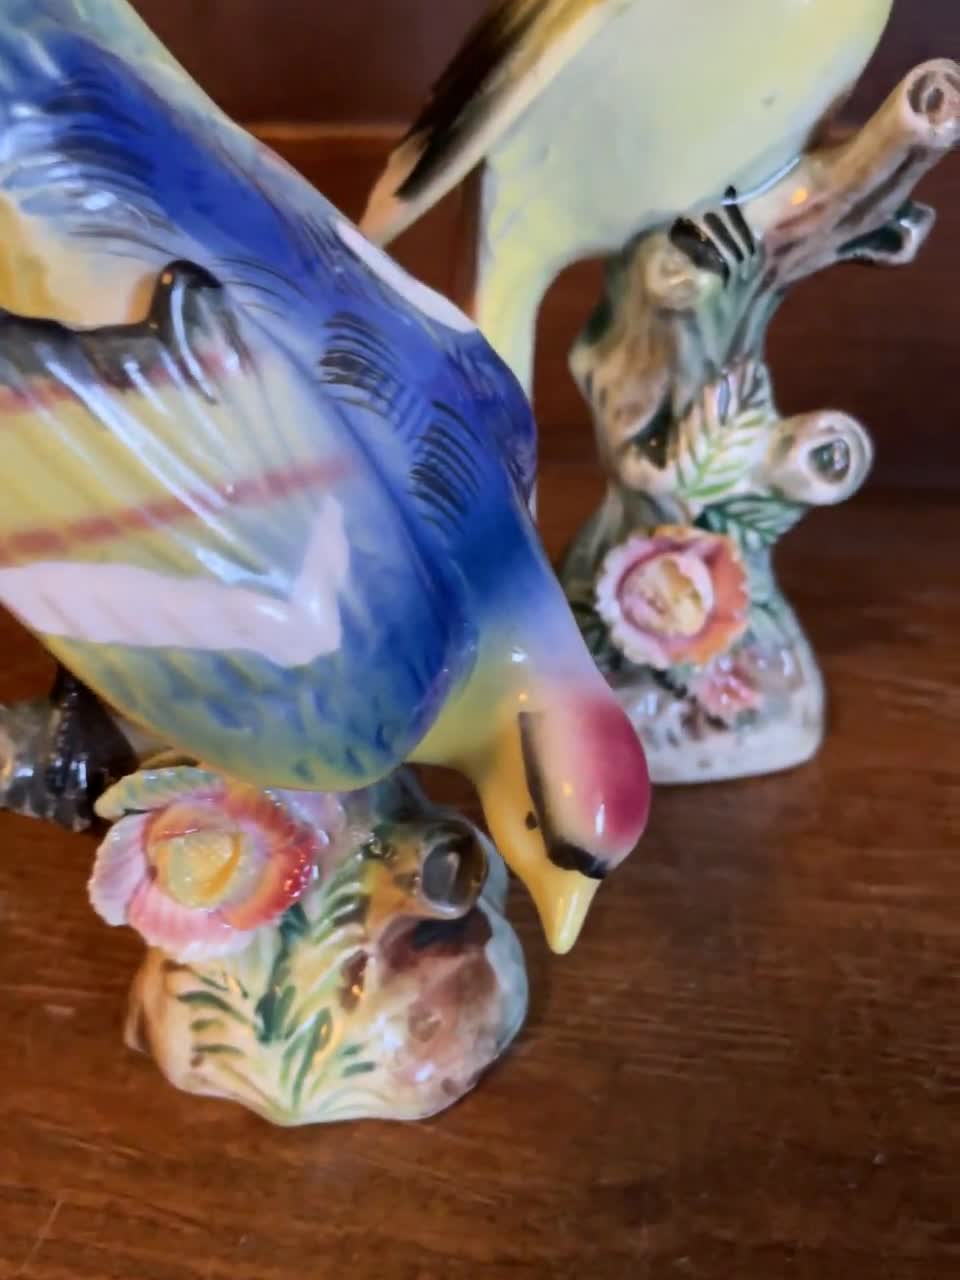 NEW! Bird Song Collection Dove Decorative Ceramic Figurine - Perch